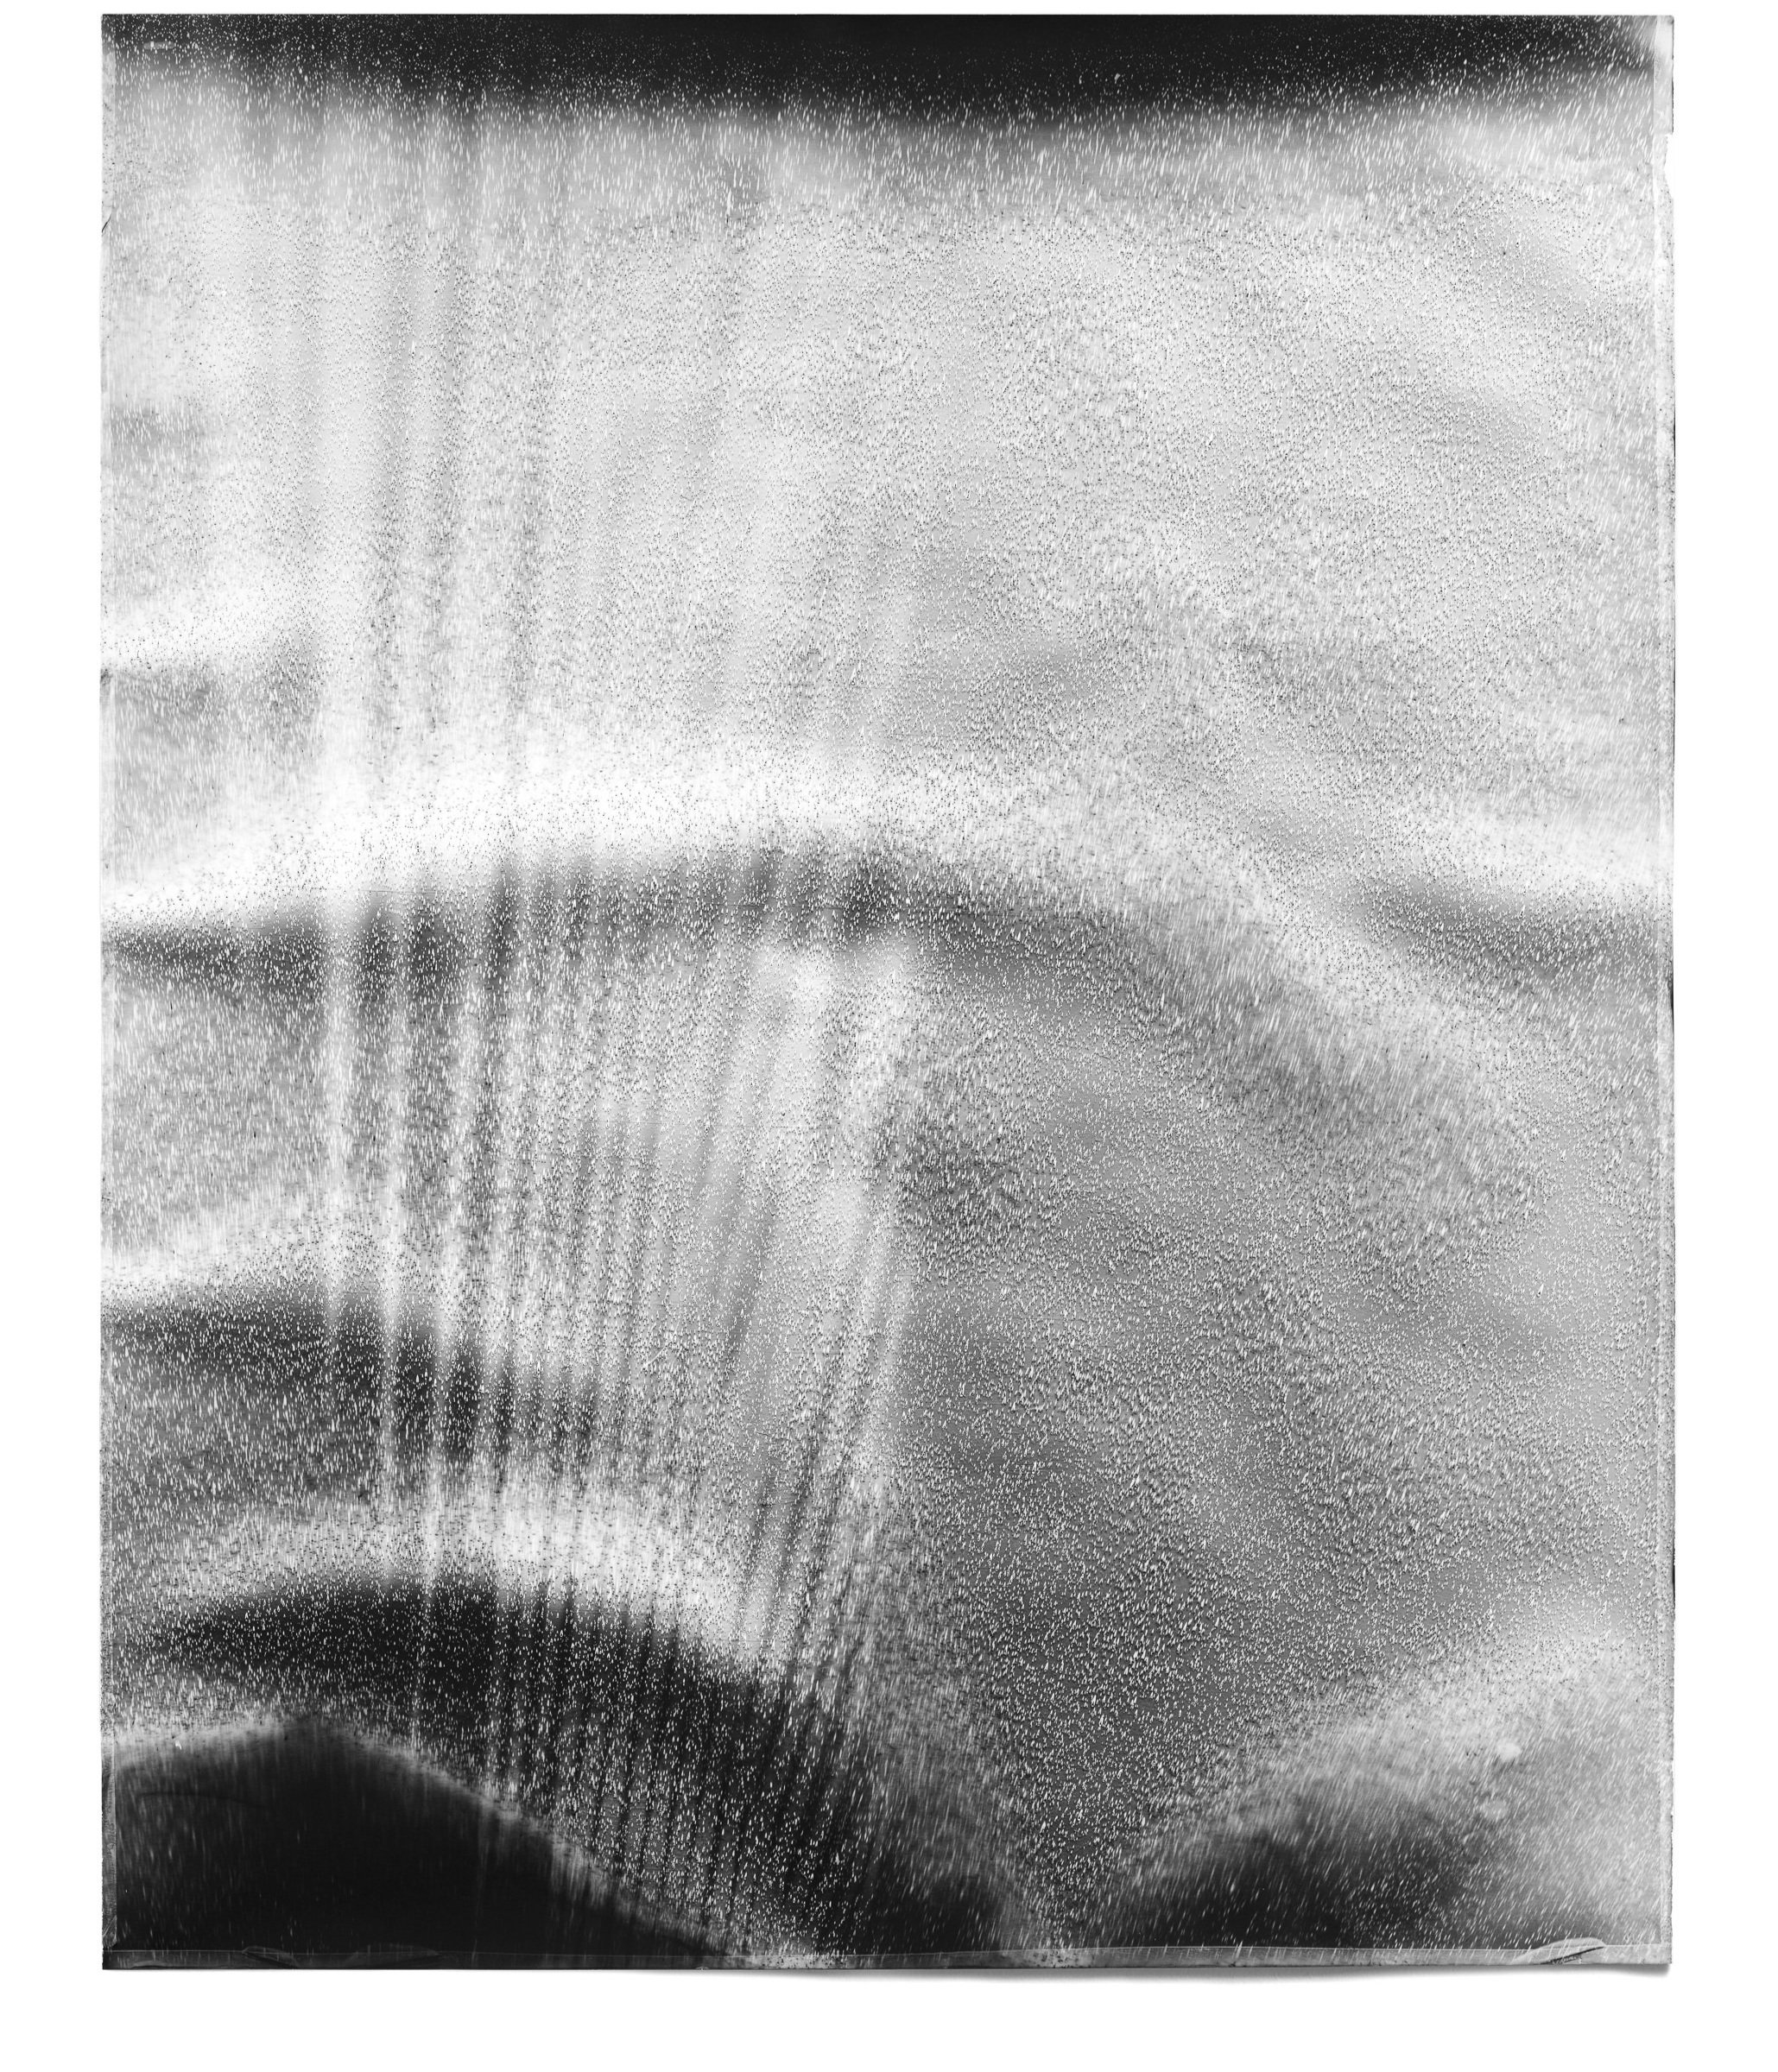   Rainstorm 26,  2015 Silver gelatin photogram 42 x 34 in 